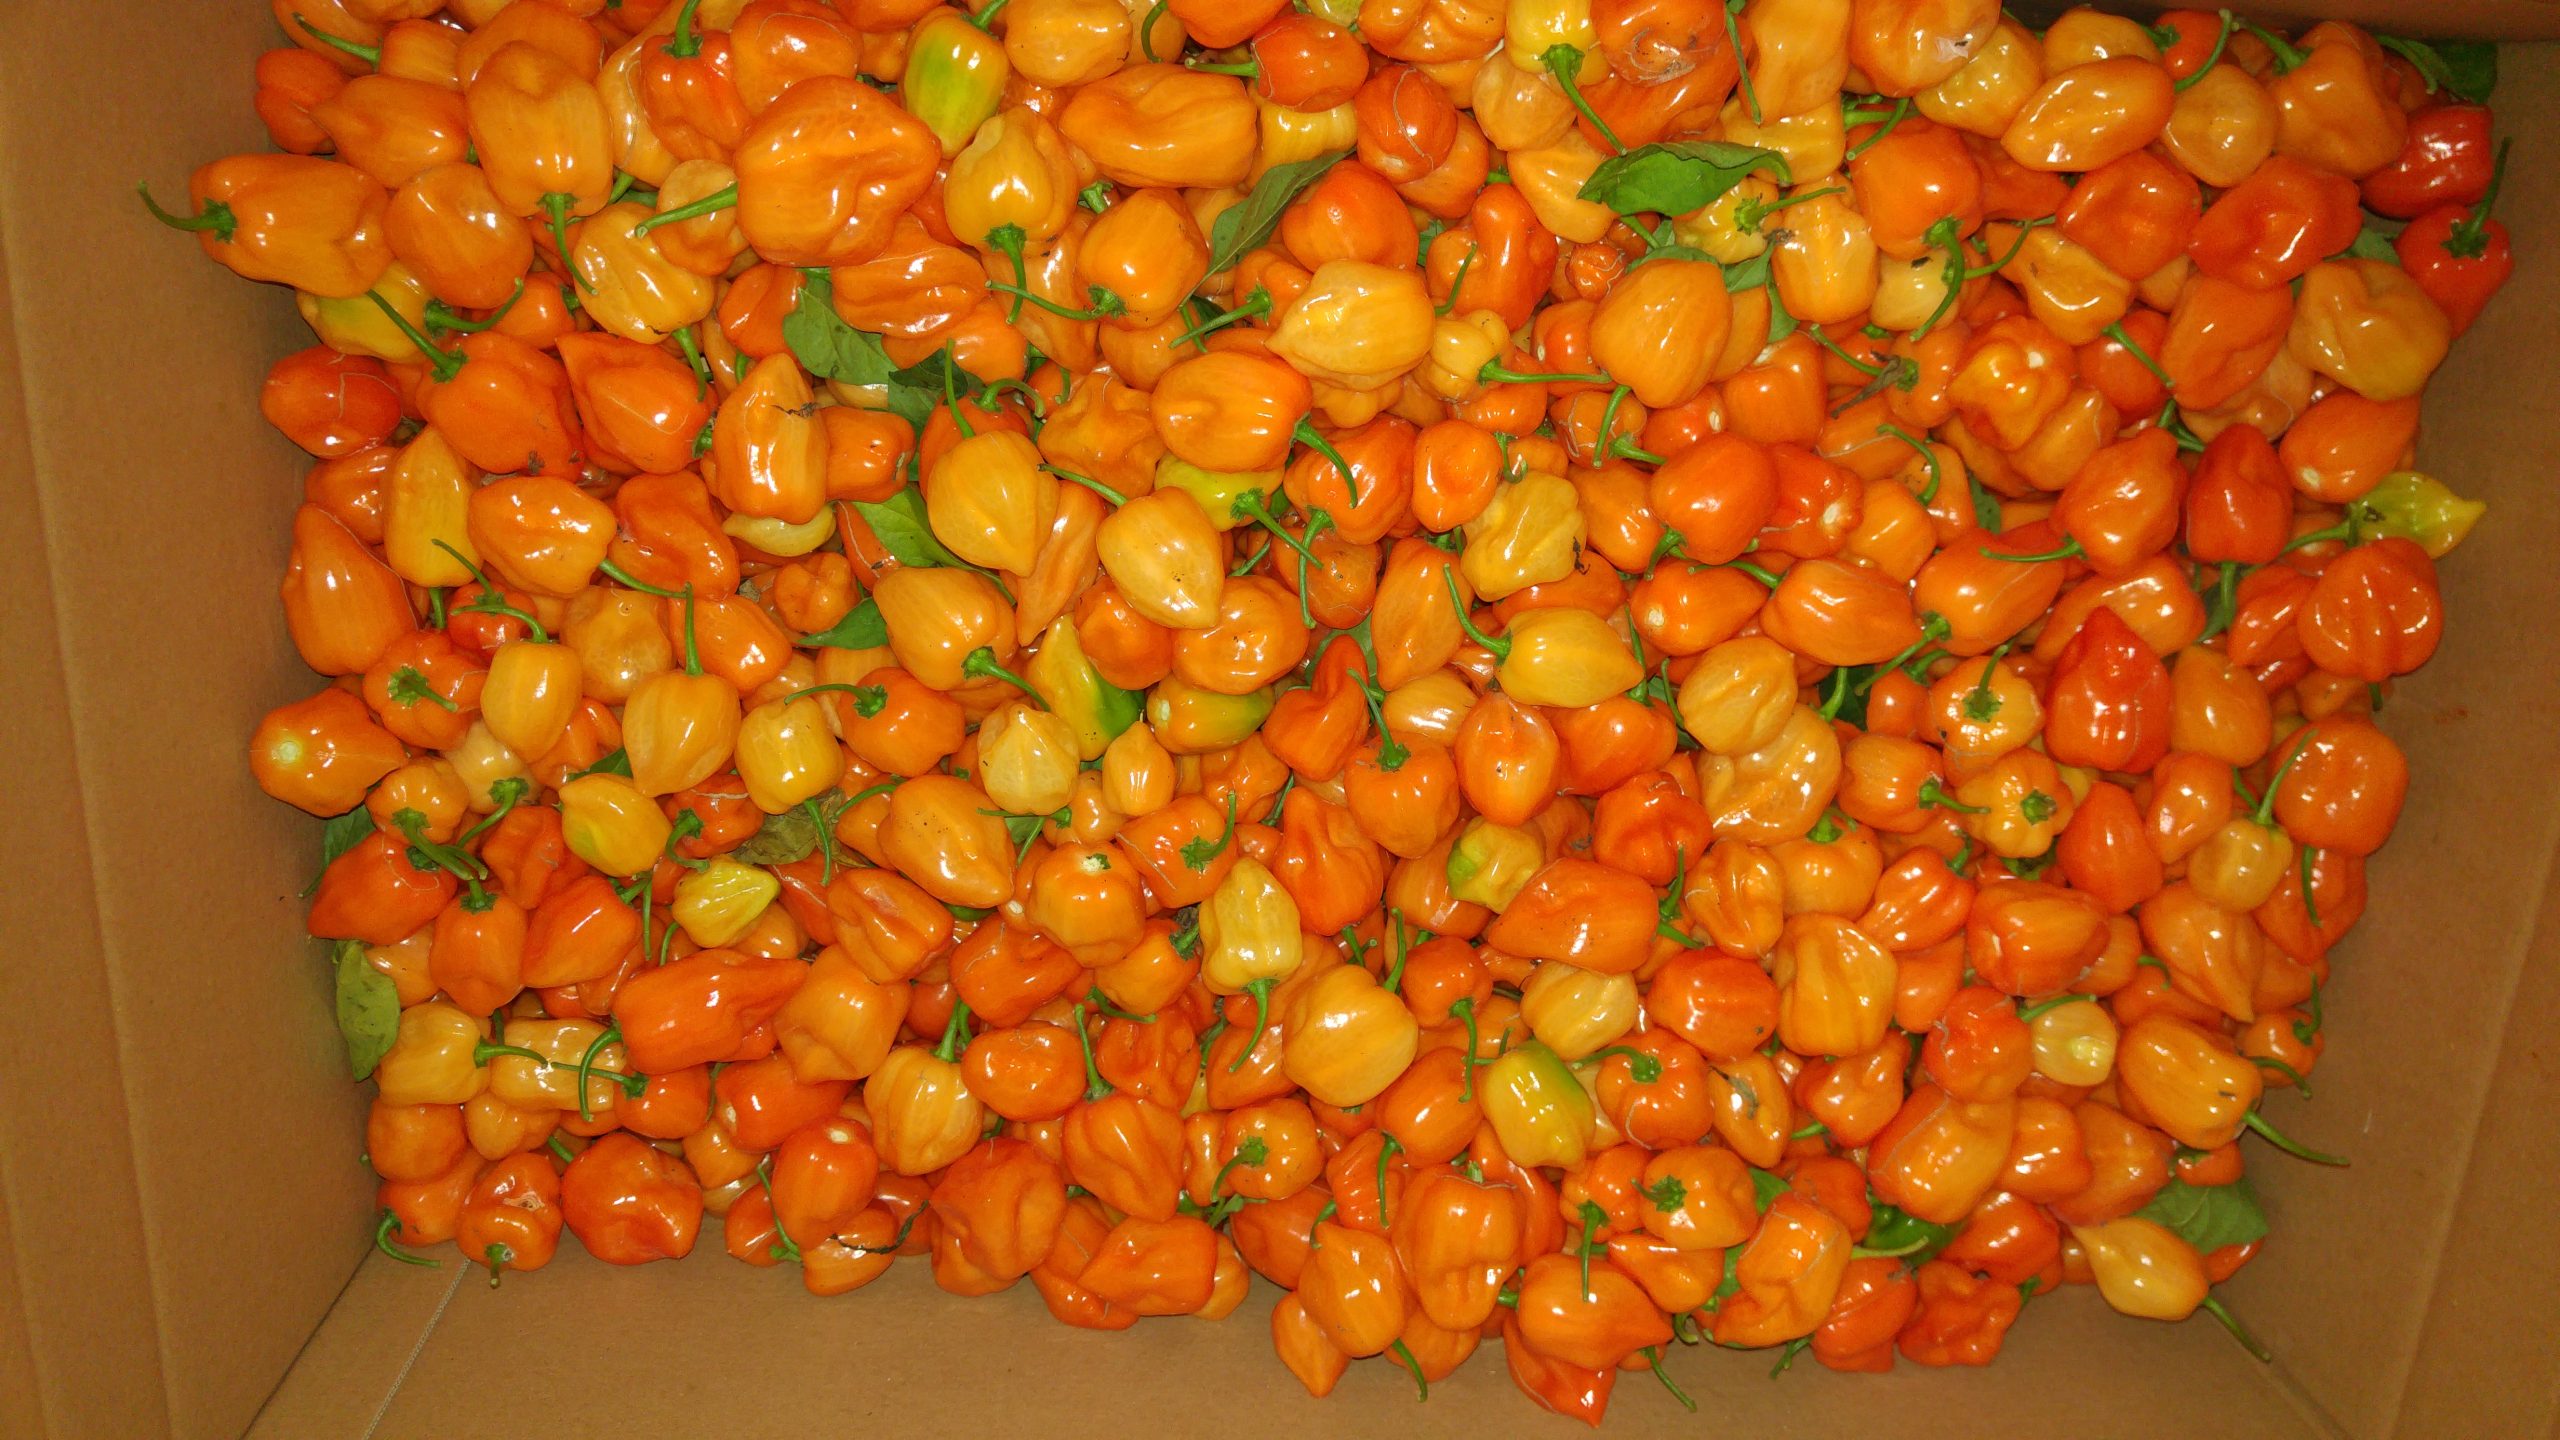 Picture of a box full of Orange Habanero Pre-order 5kg Orange Habanero chilli peppers